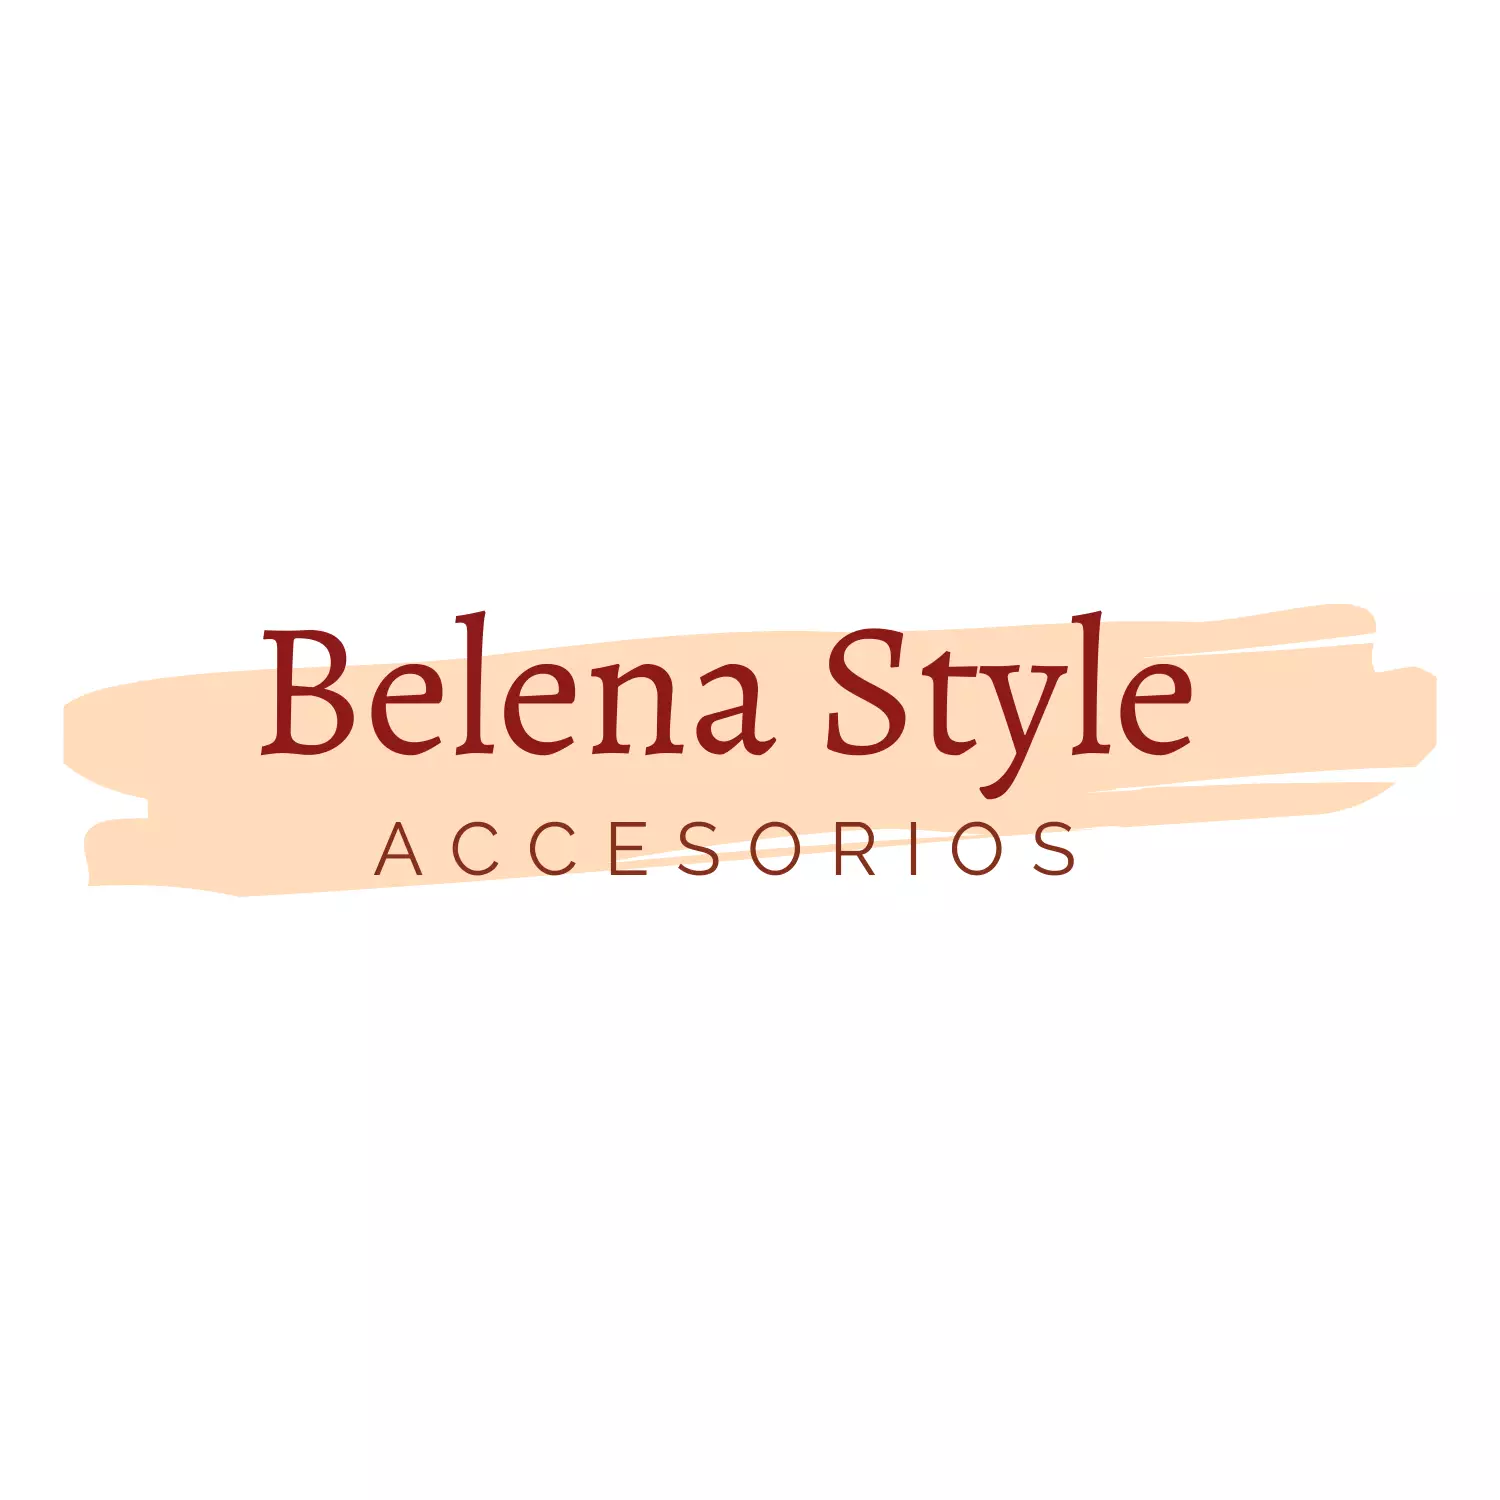 Belena Style - Día sin IVA